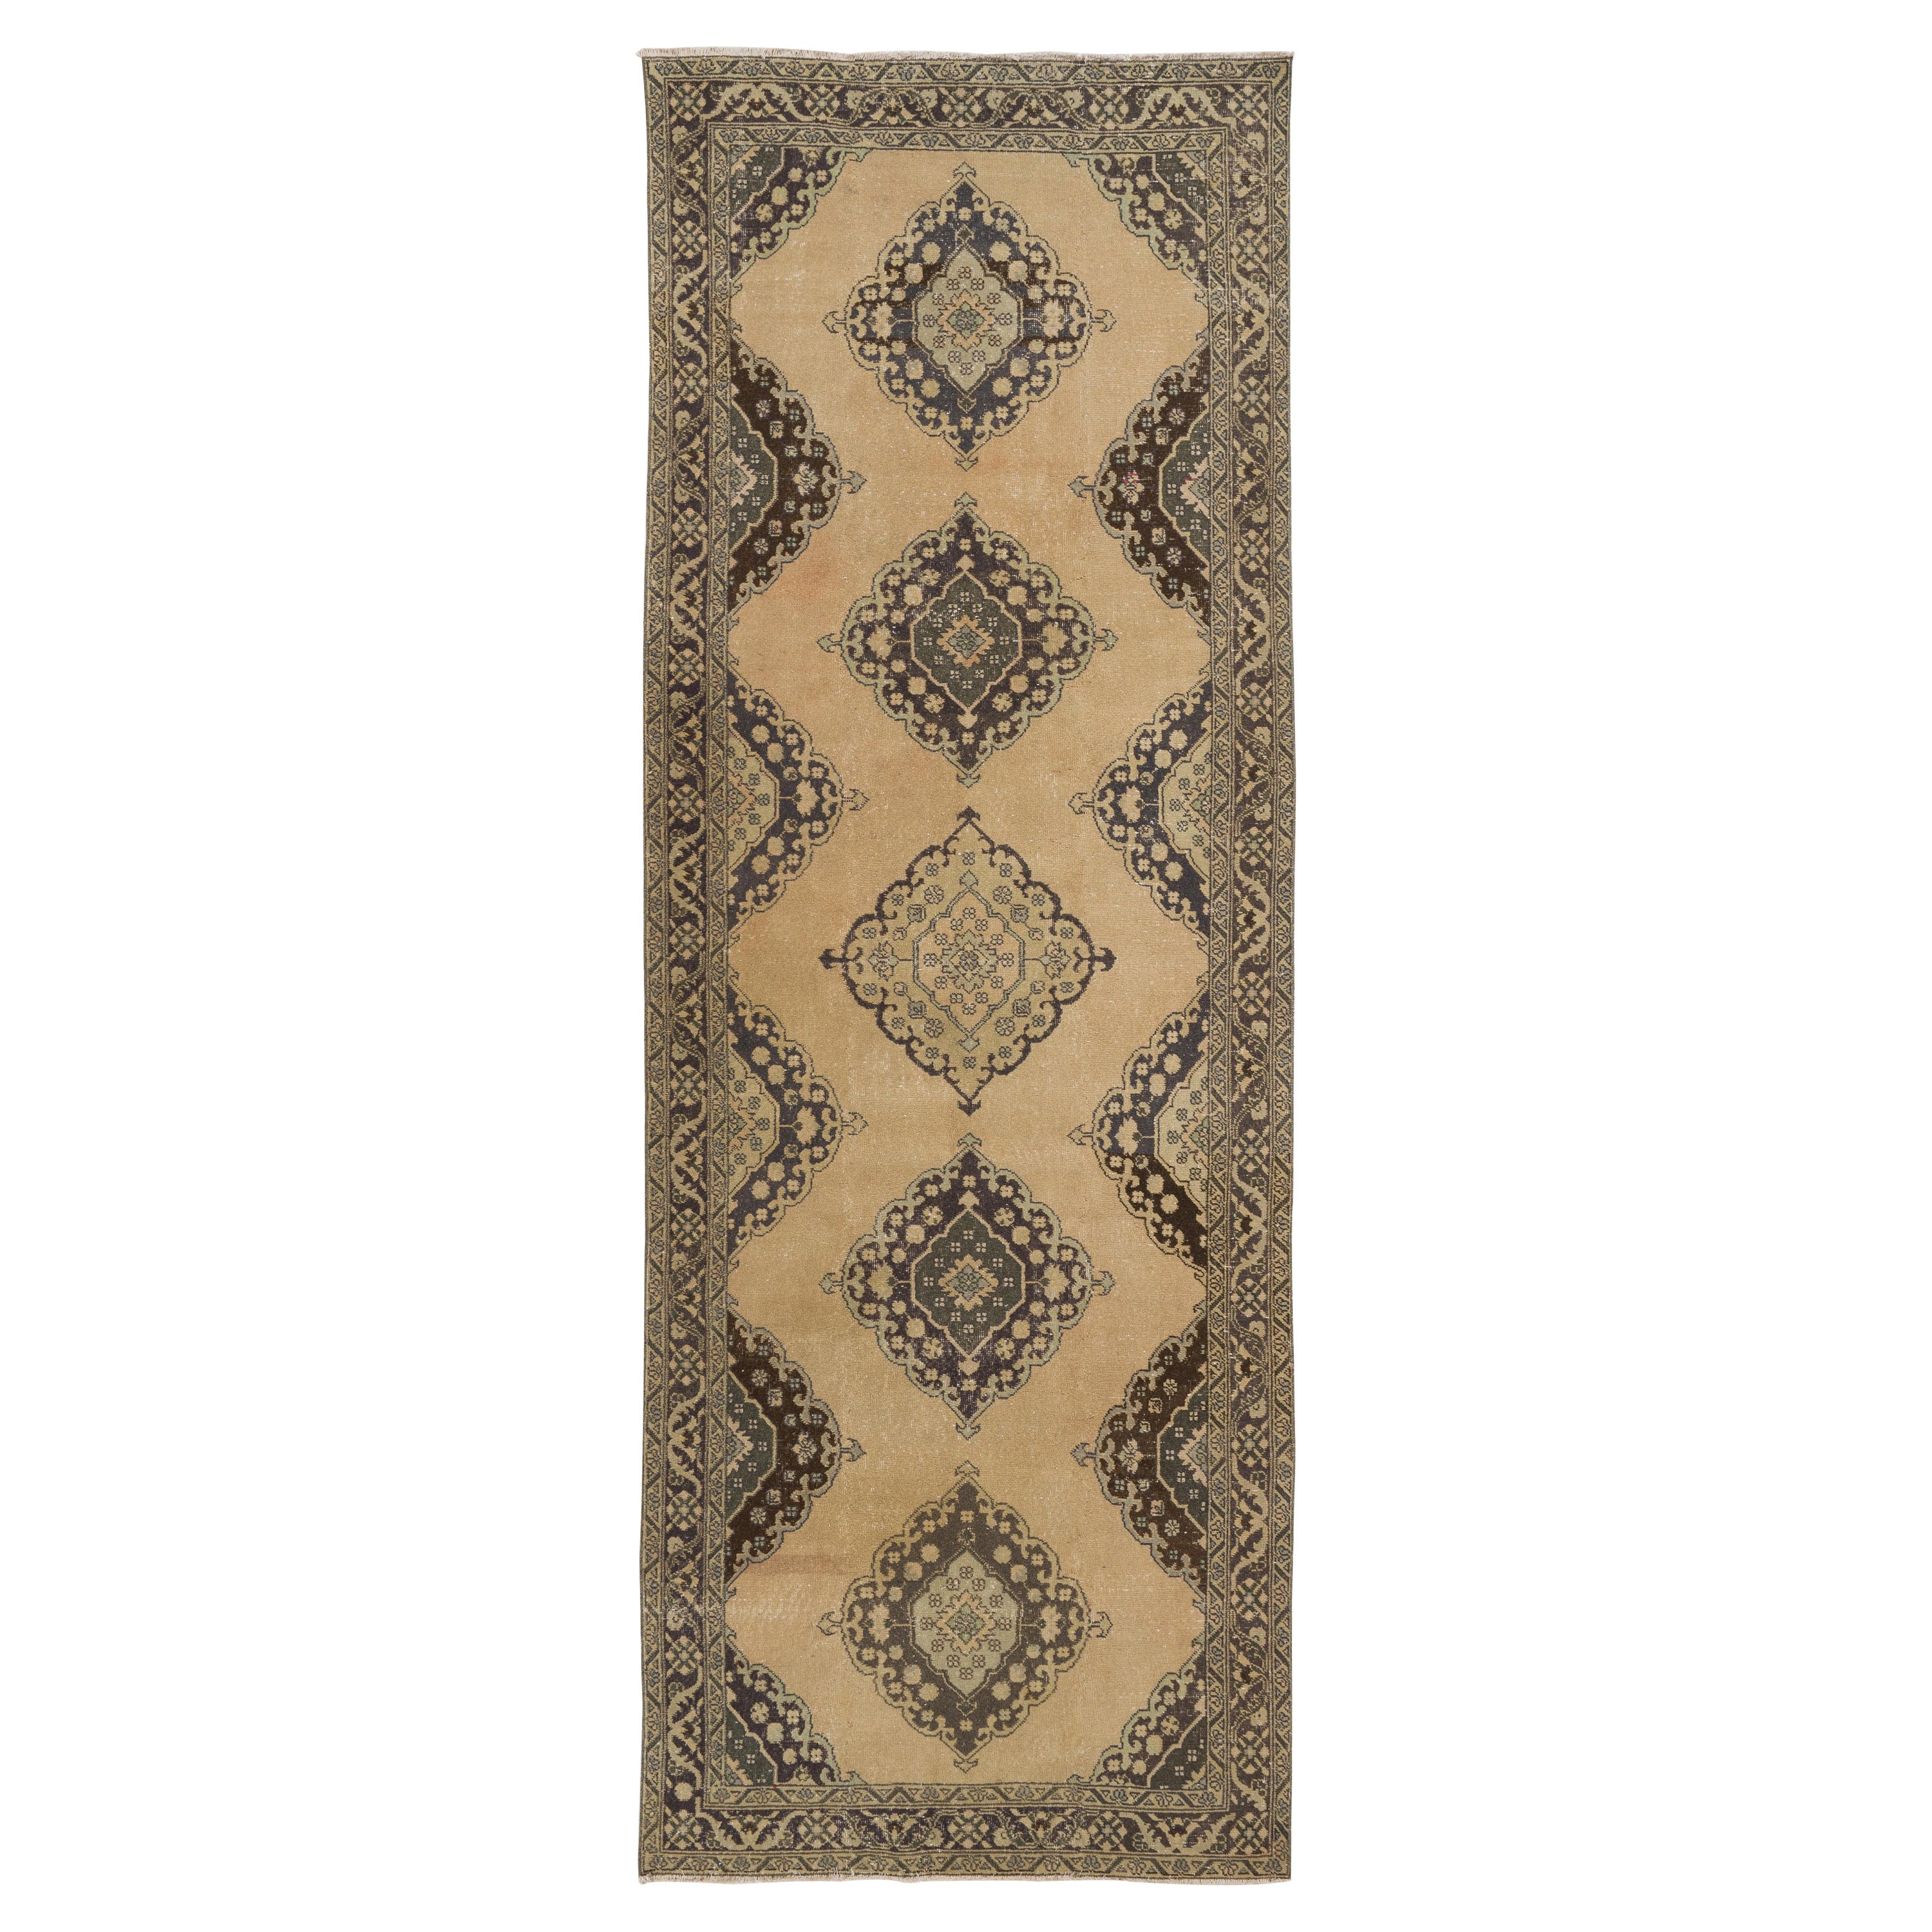 4.7x13 ft Vintage Turkish Oushak Runner Carpet, Hand Knotted Rug for Hallway For Sale